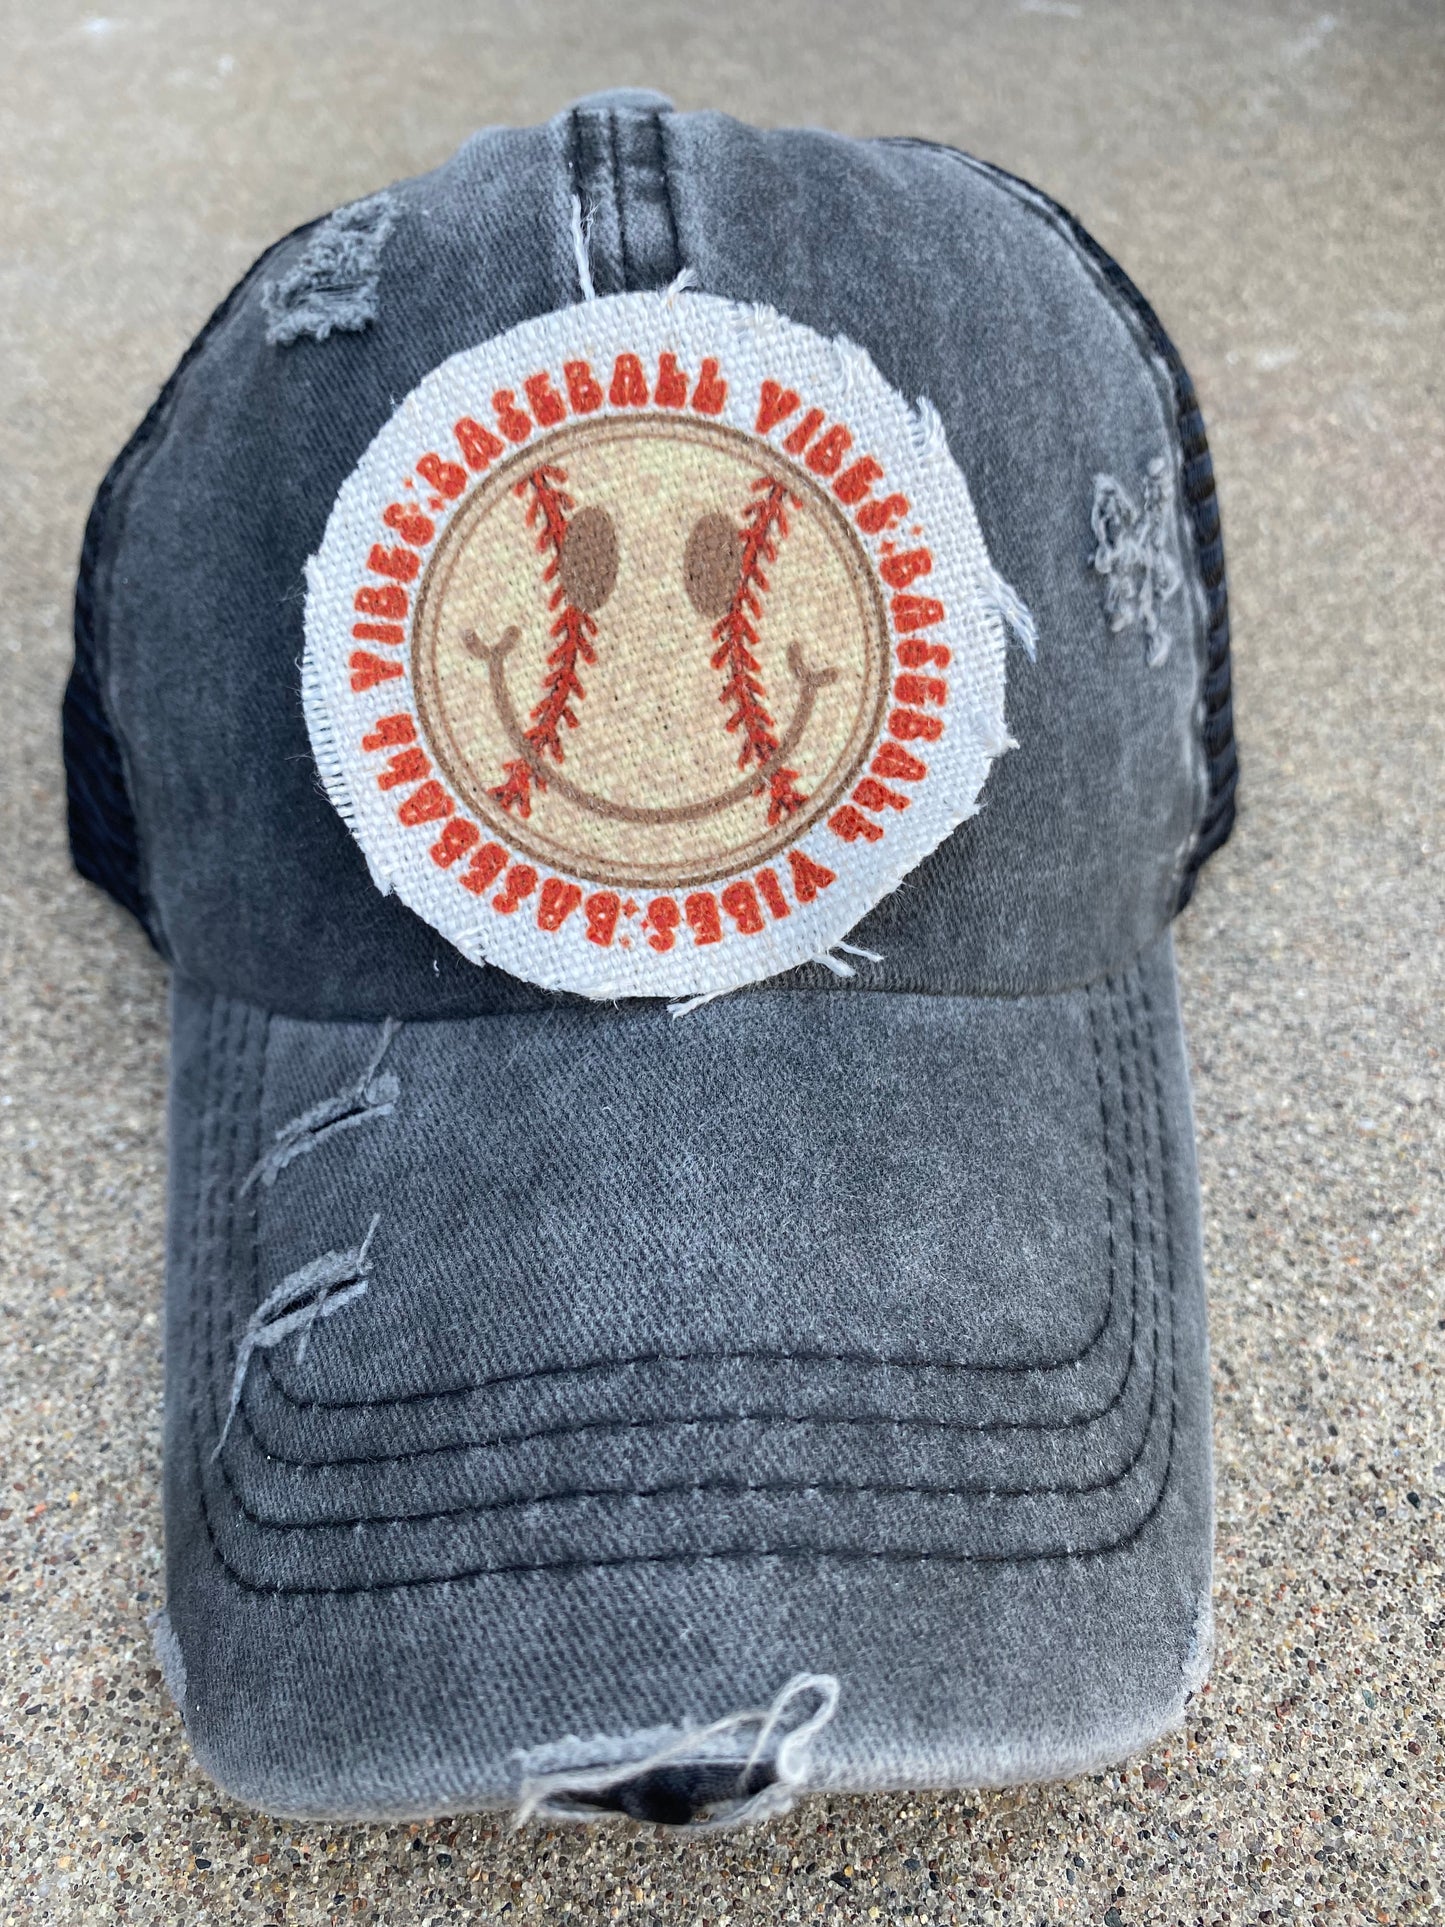 Baseball Vibes Circle Hat Patch